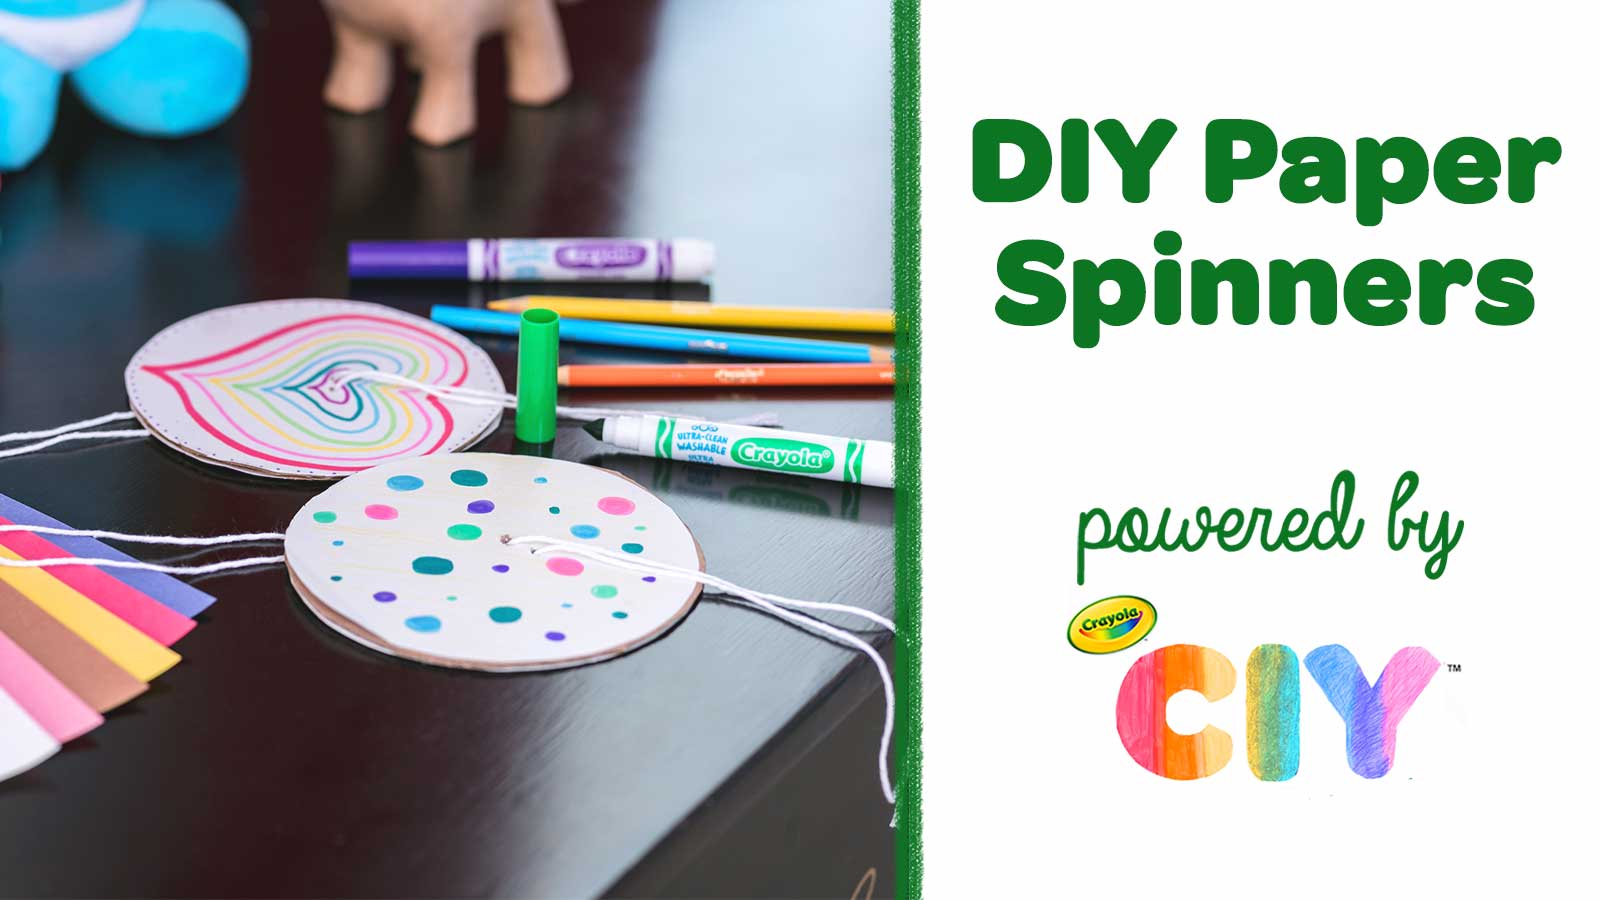 DIY - How to Make Spinning Wheel from Cardboard - Cardboard Crafts 